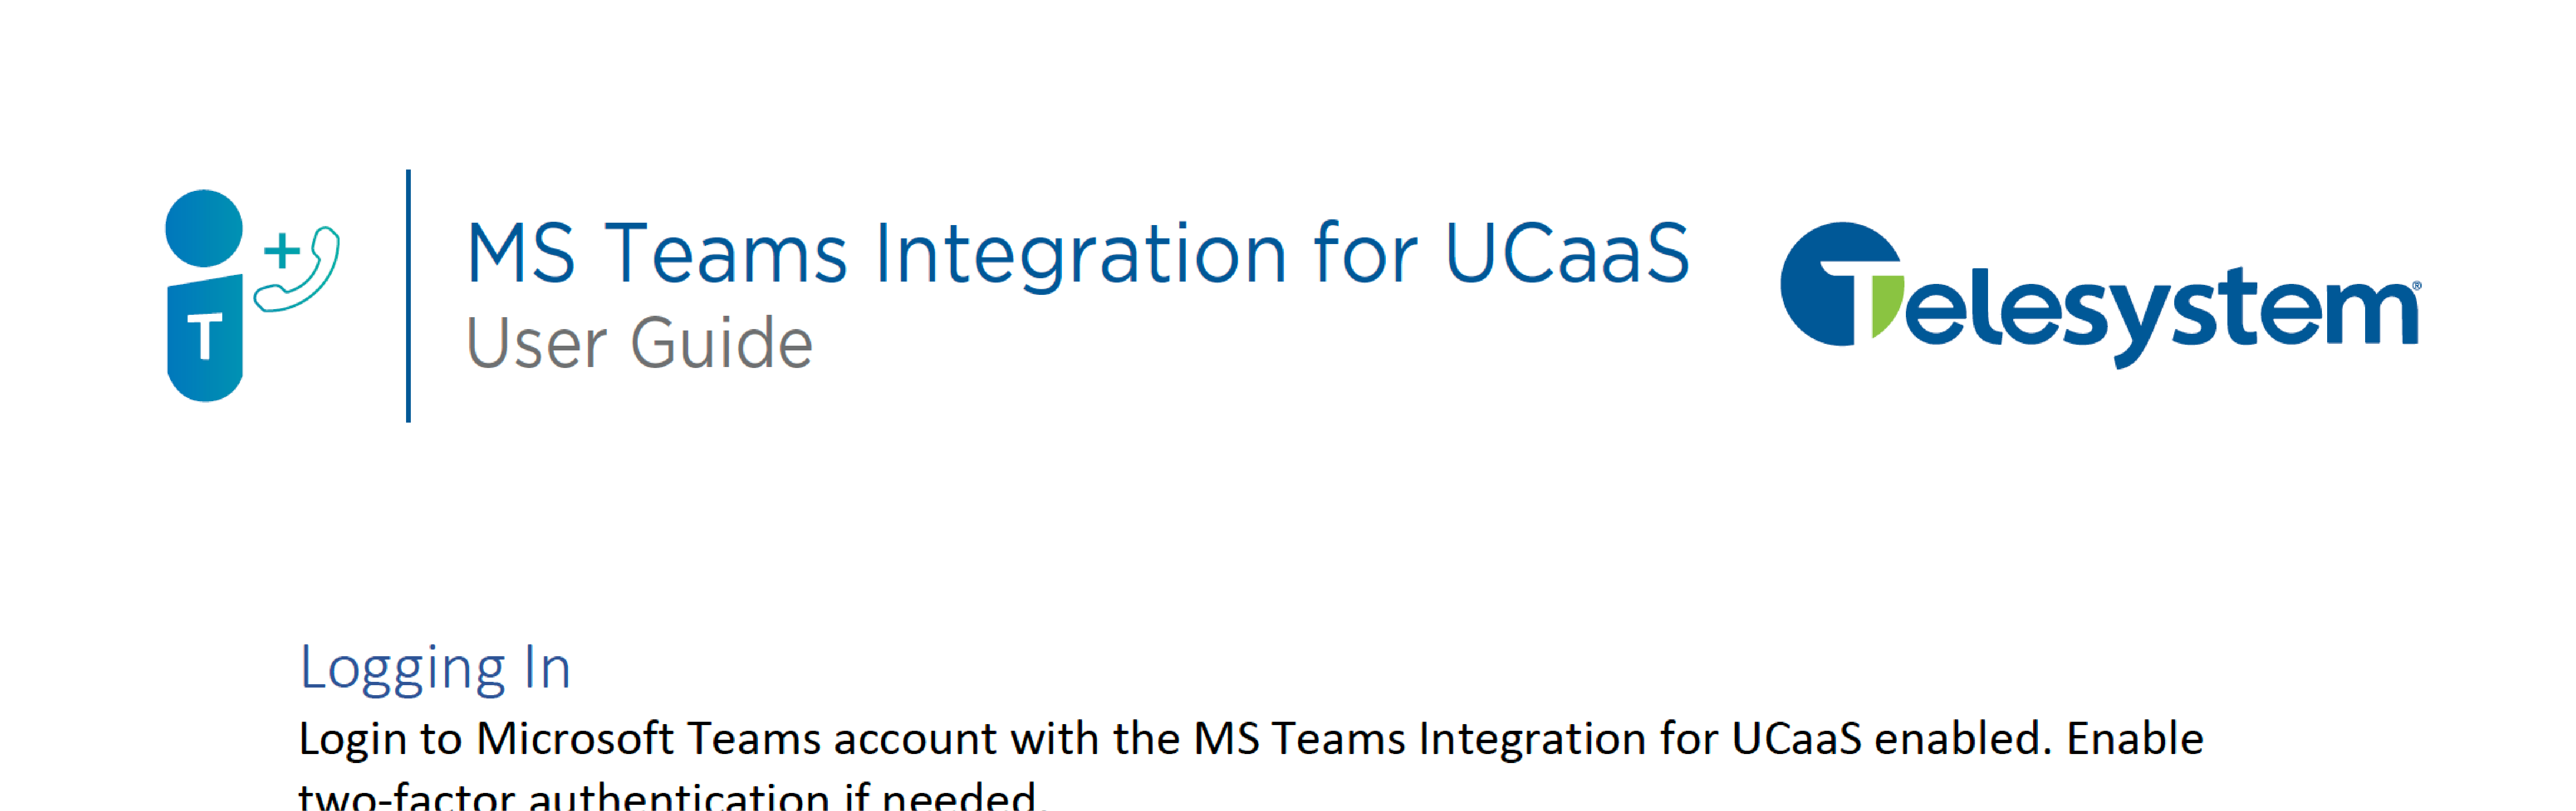 MS Teams Integration for UCaaS Thumbnail